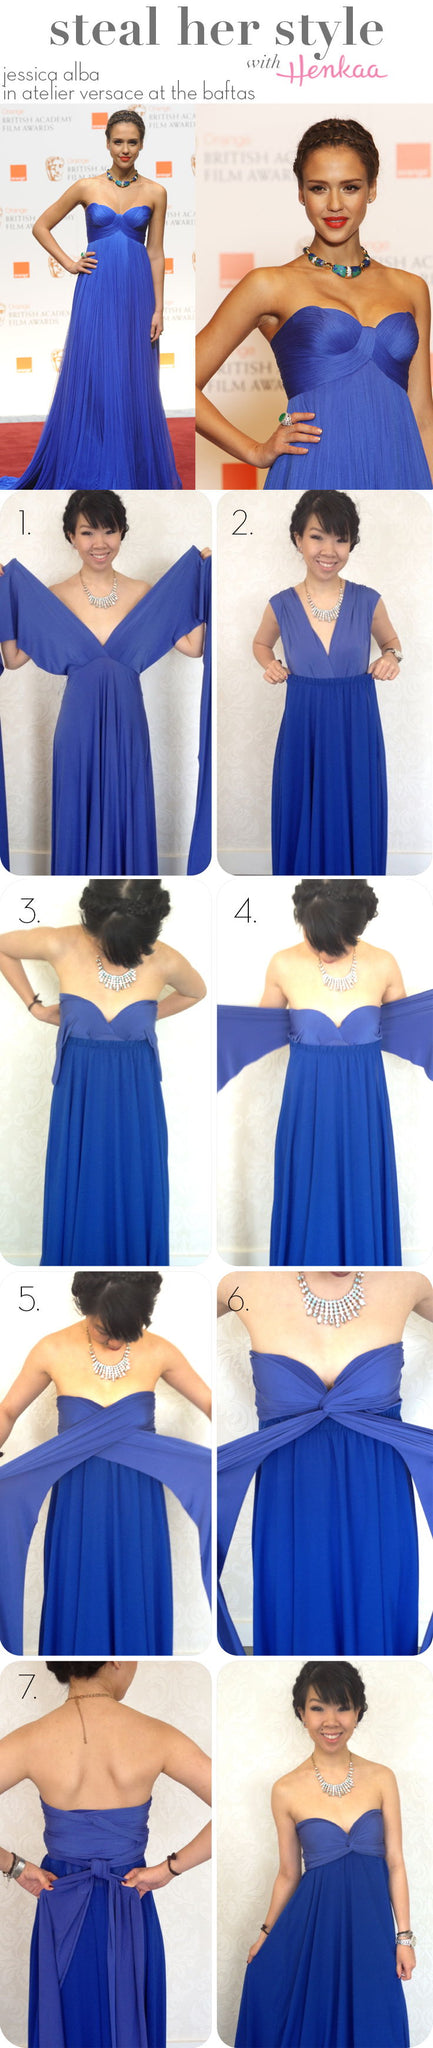 atelier versace - Jessica Alba 2011 BAFTA Dress - how to dress like Jessica Alba - royal blue gown - royal blue infinity dress